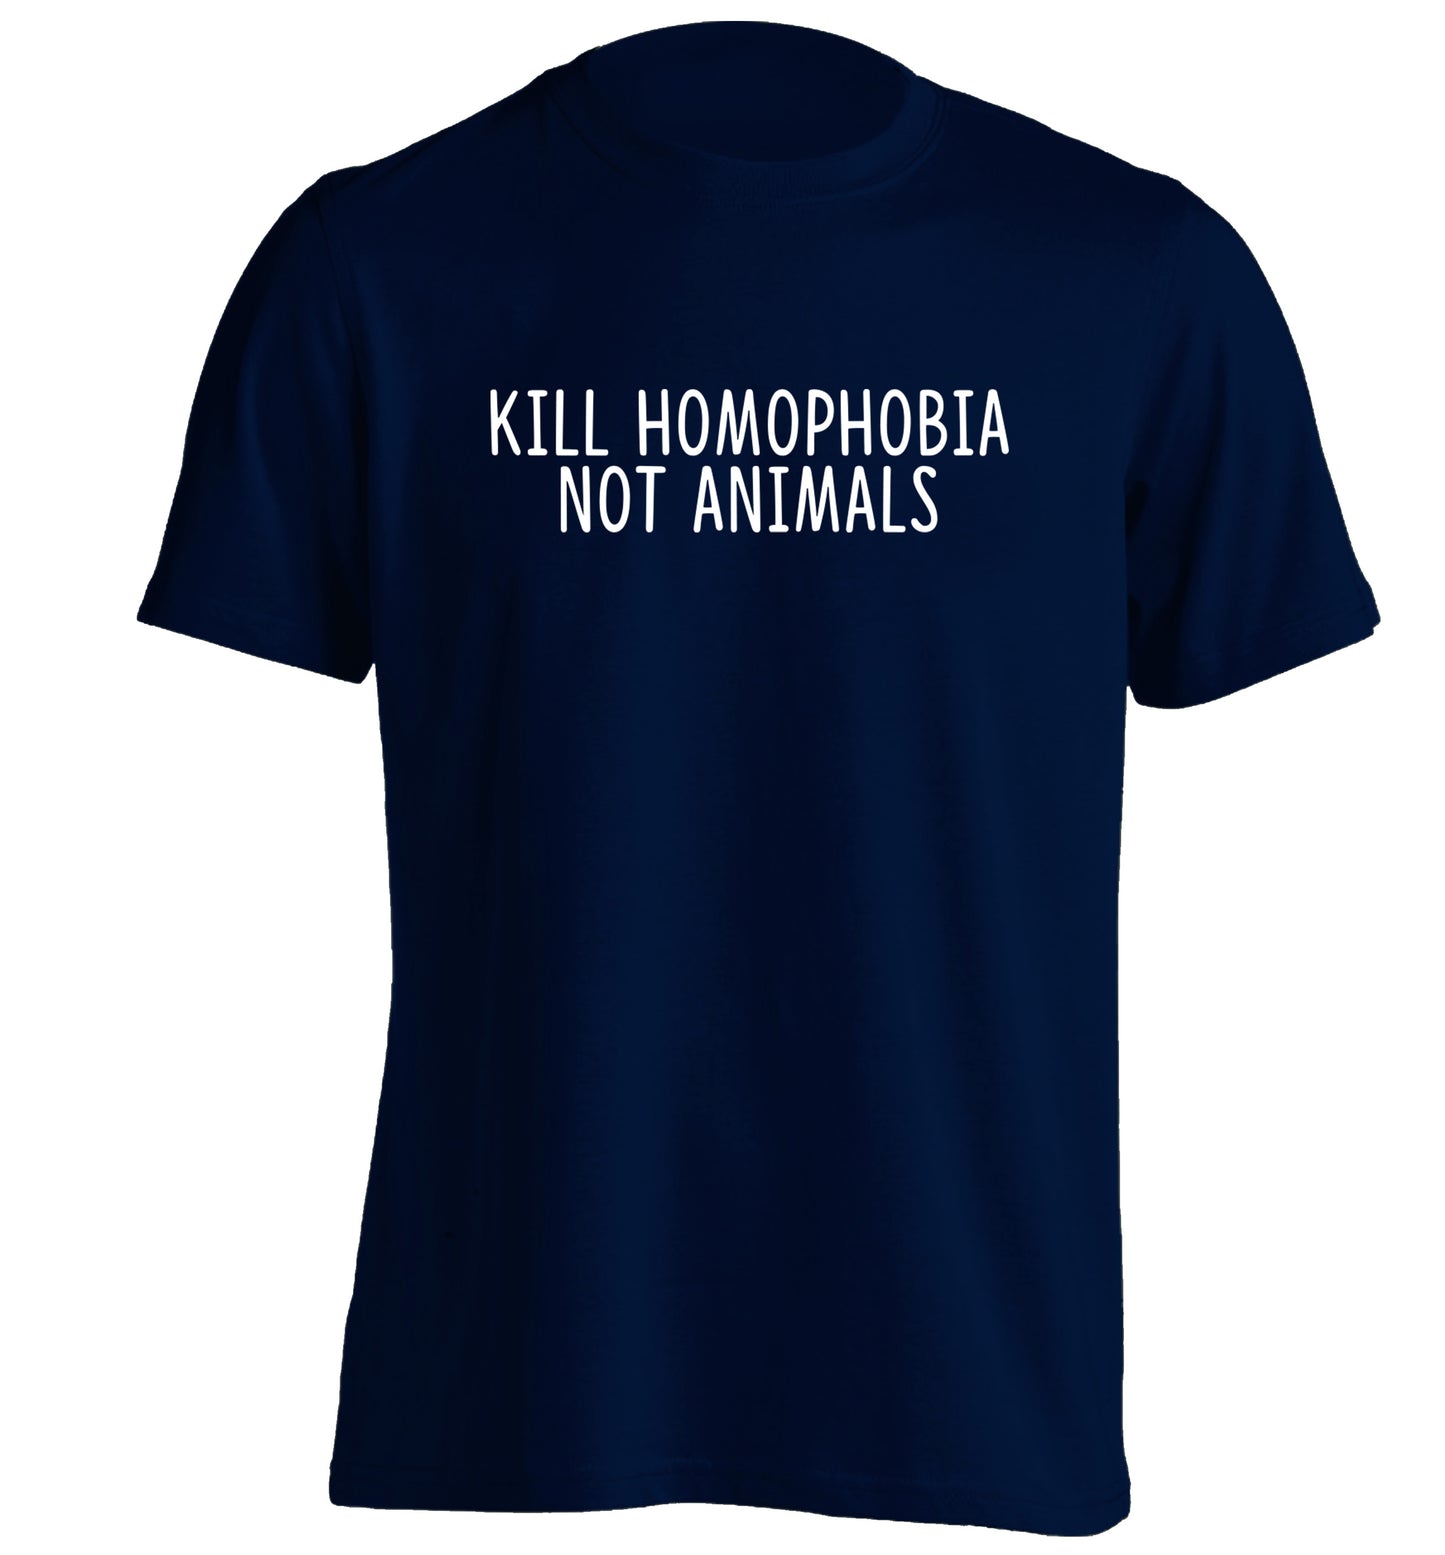 Kill Homophobia Not Animals adults unisex navy Tshirt 2XL